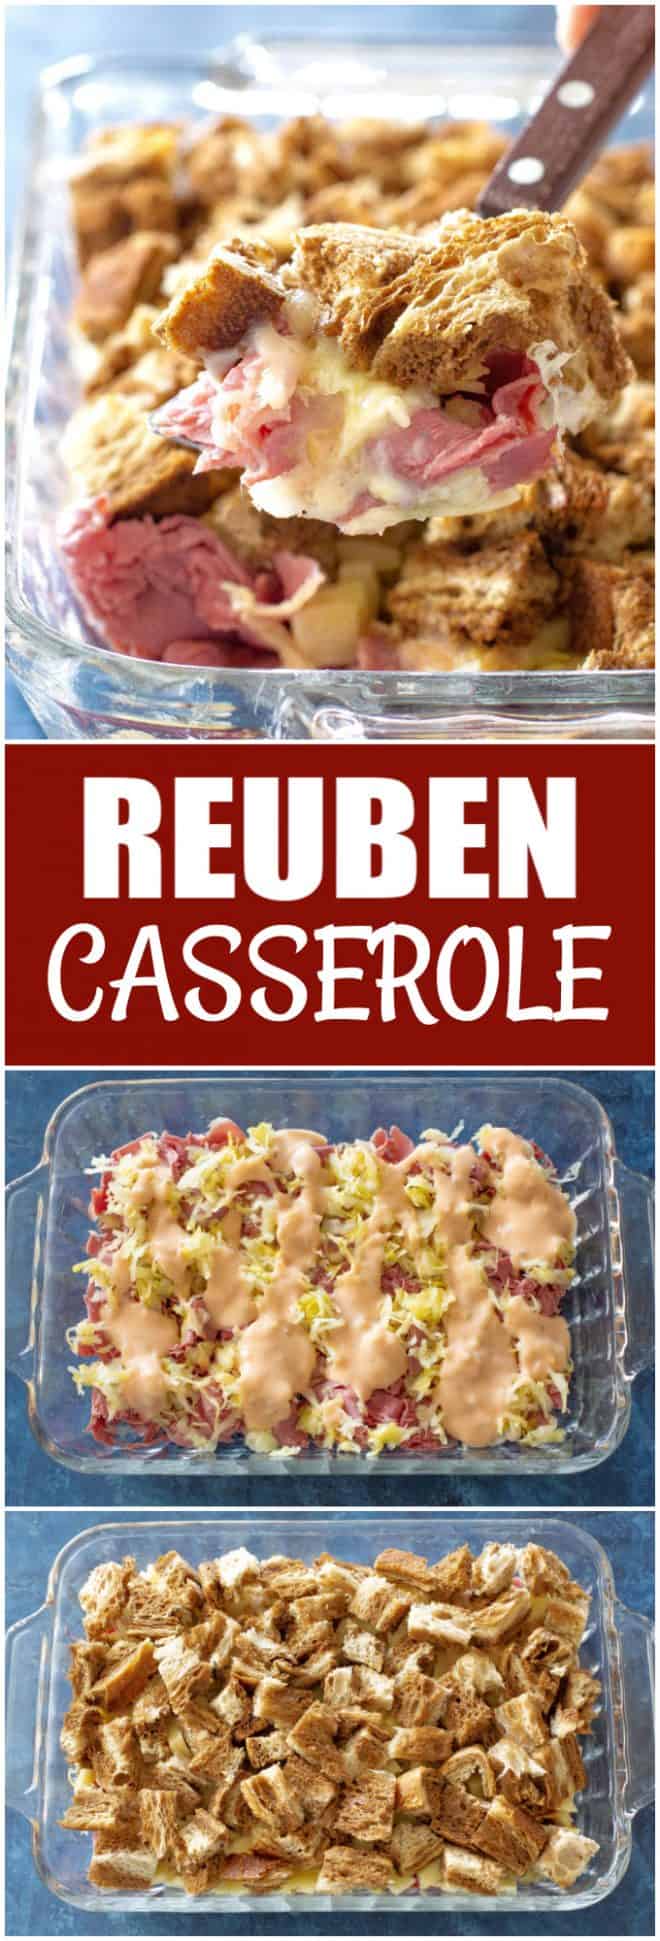 reuben casserole with corned beef